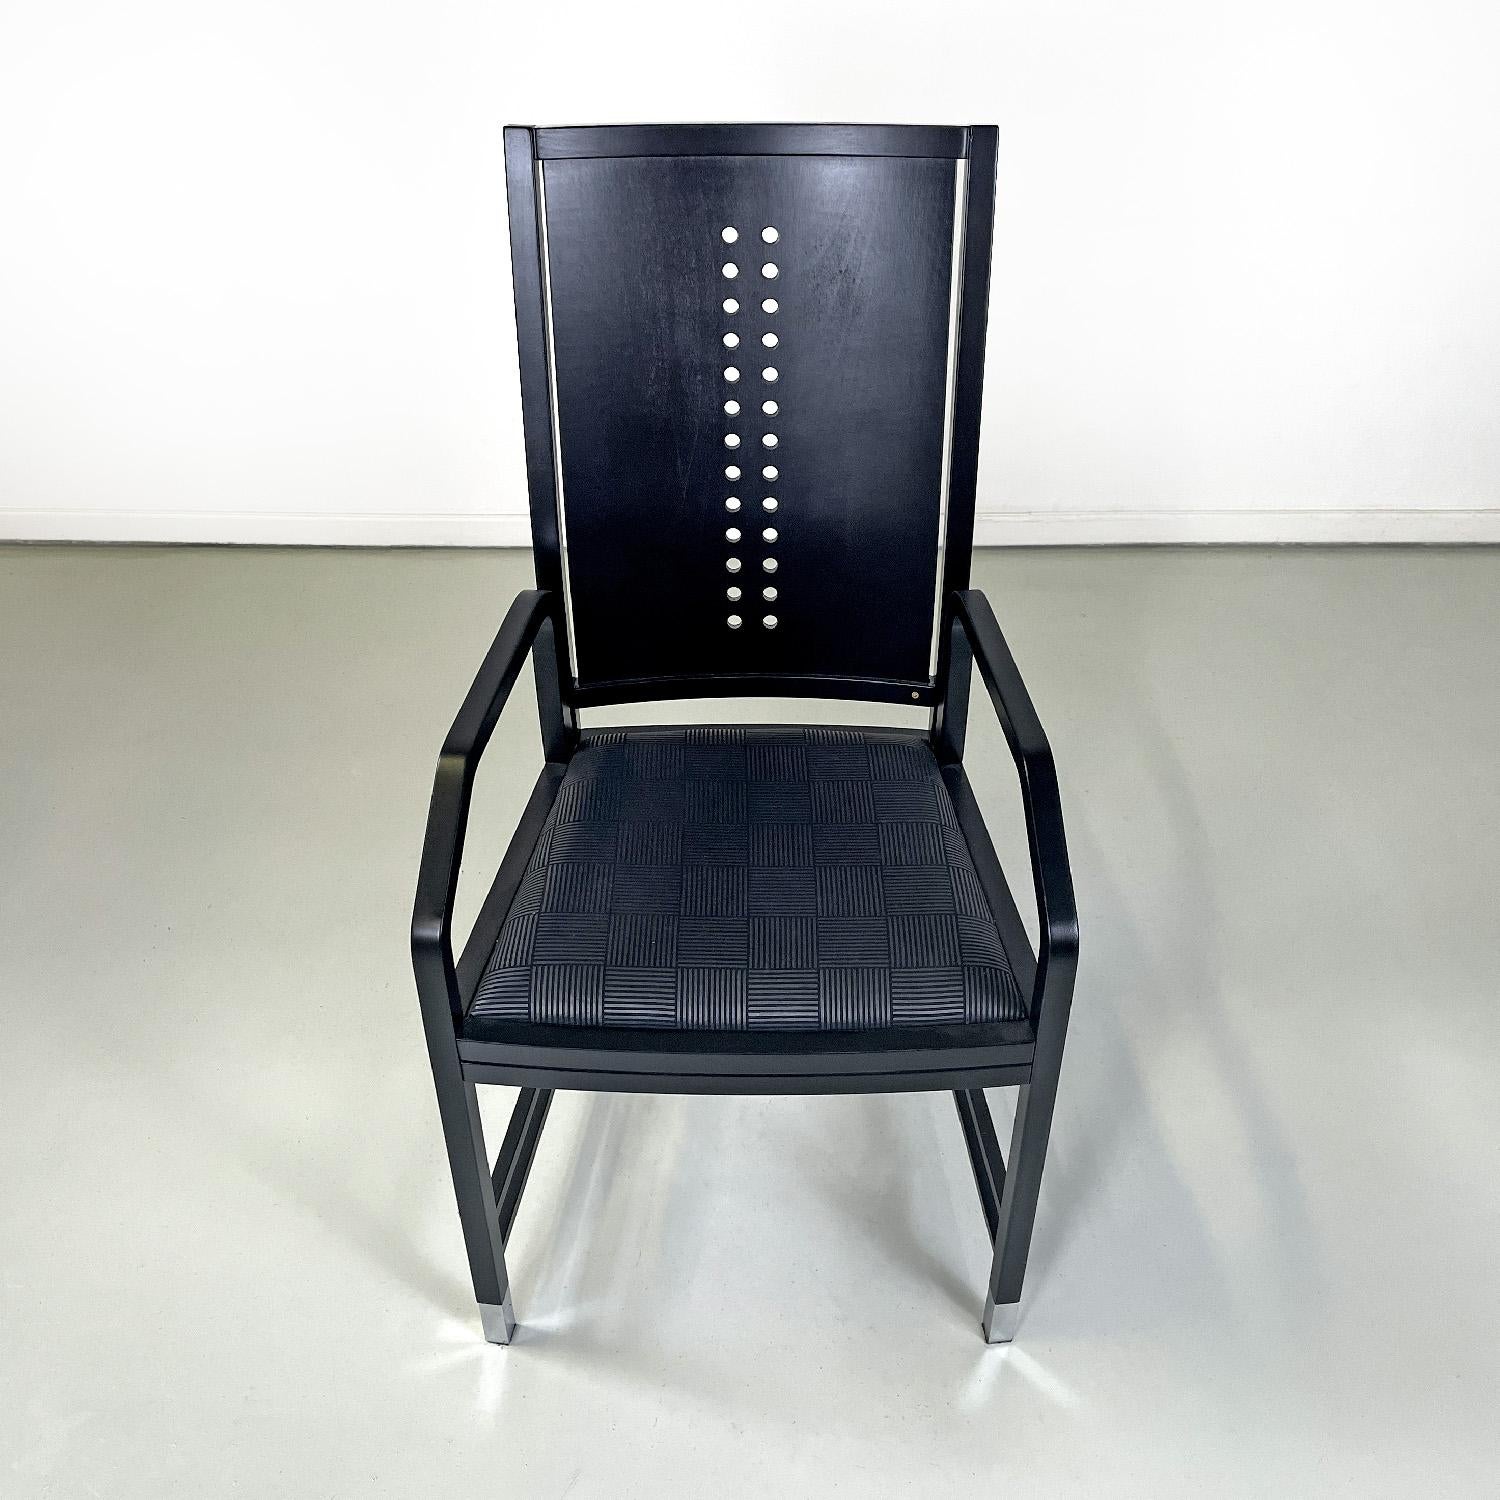 Metal Austrian modern black wooden chairs by Ernst W. Beranek for Thonet, 1990s For Sale